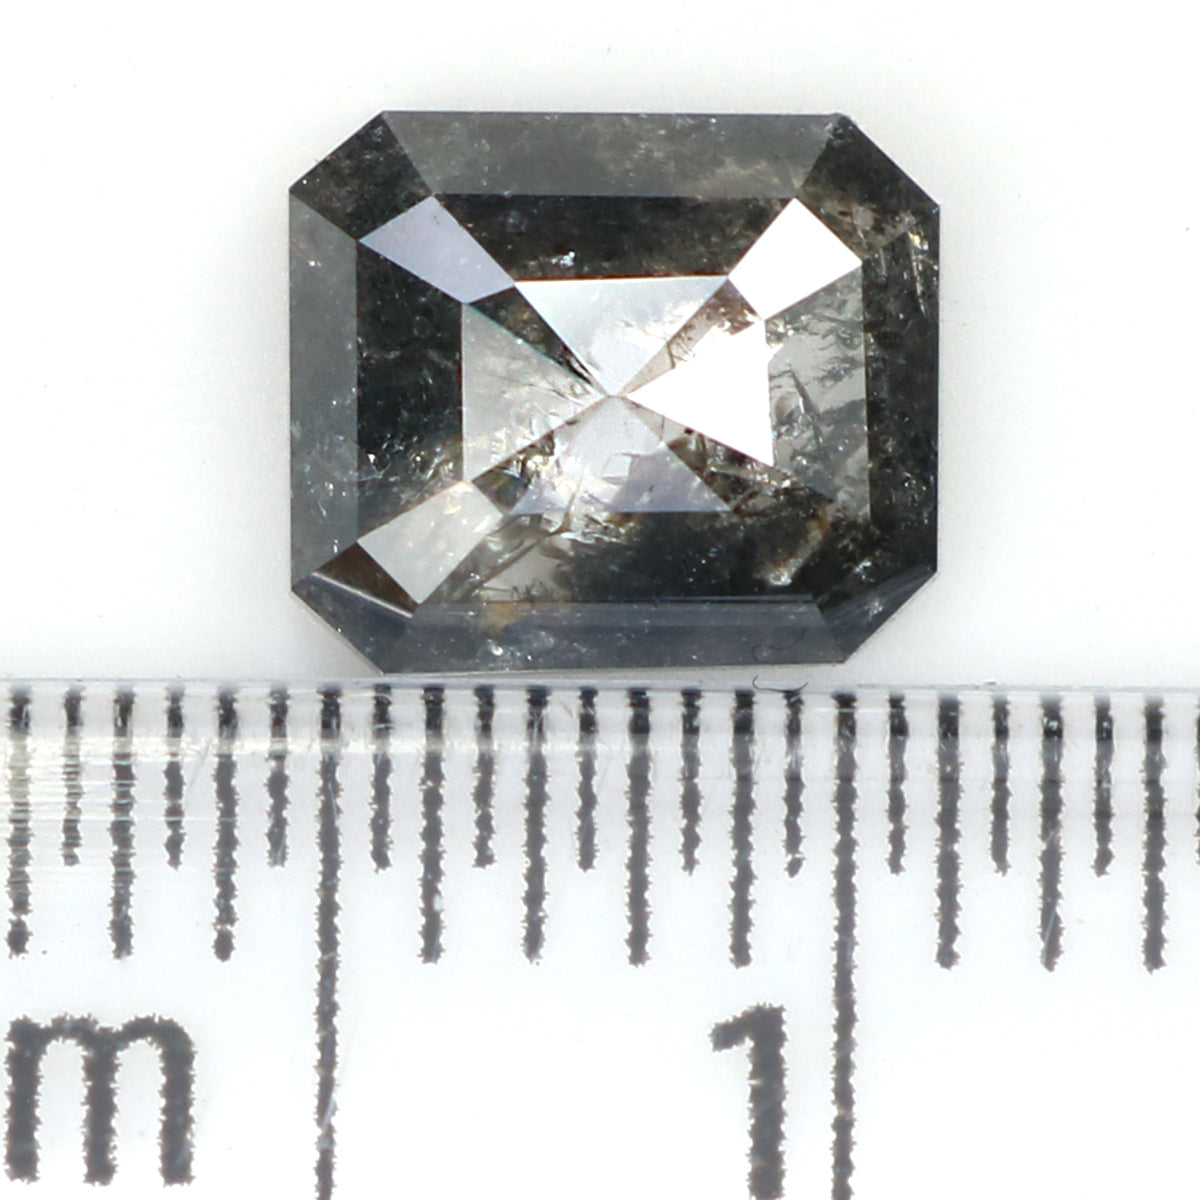 0.99 CT Natural Loose Emerald Shape Diamond Salt And Pepper Emerald Shape Diamond 6.40 MM Black Grey Color Emerald Rose Cut Diamond LQ1337